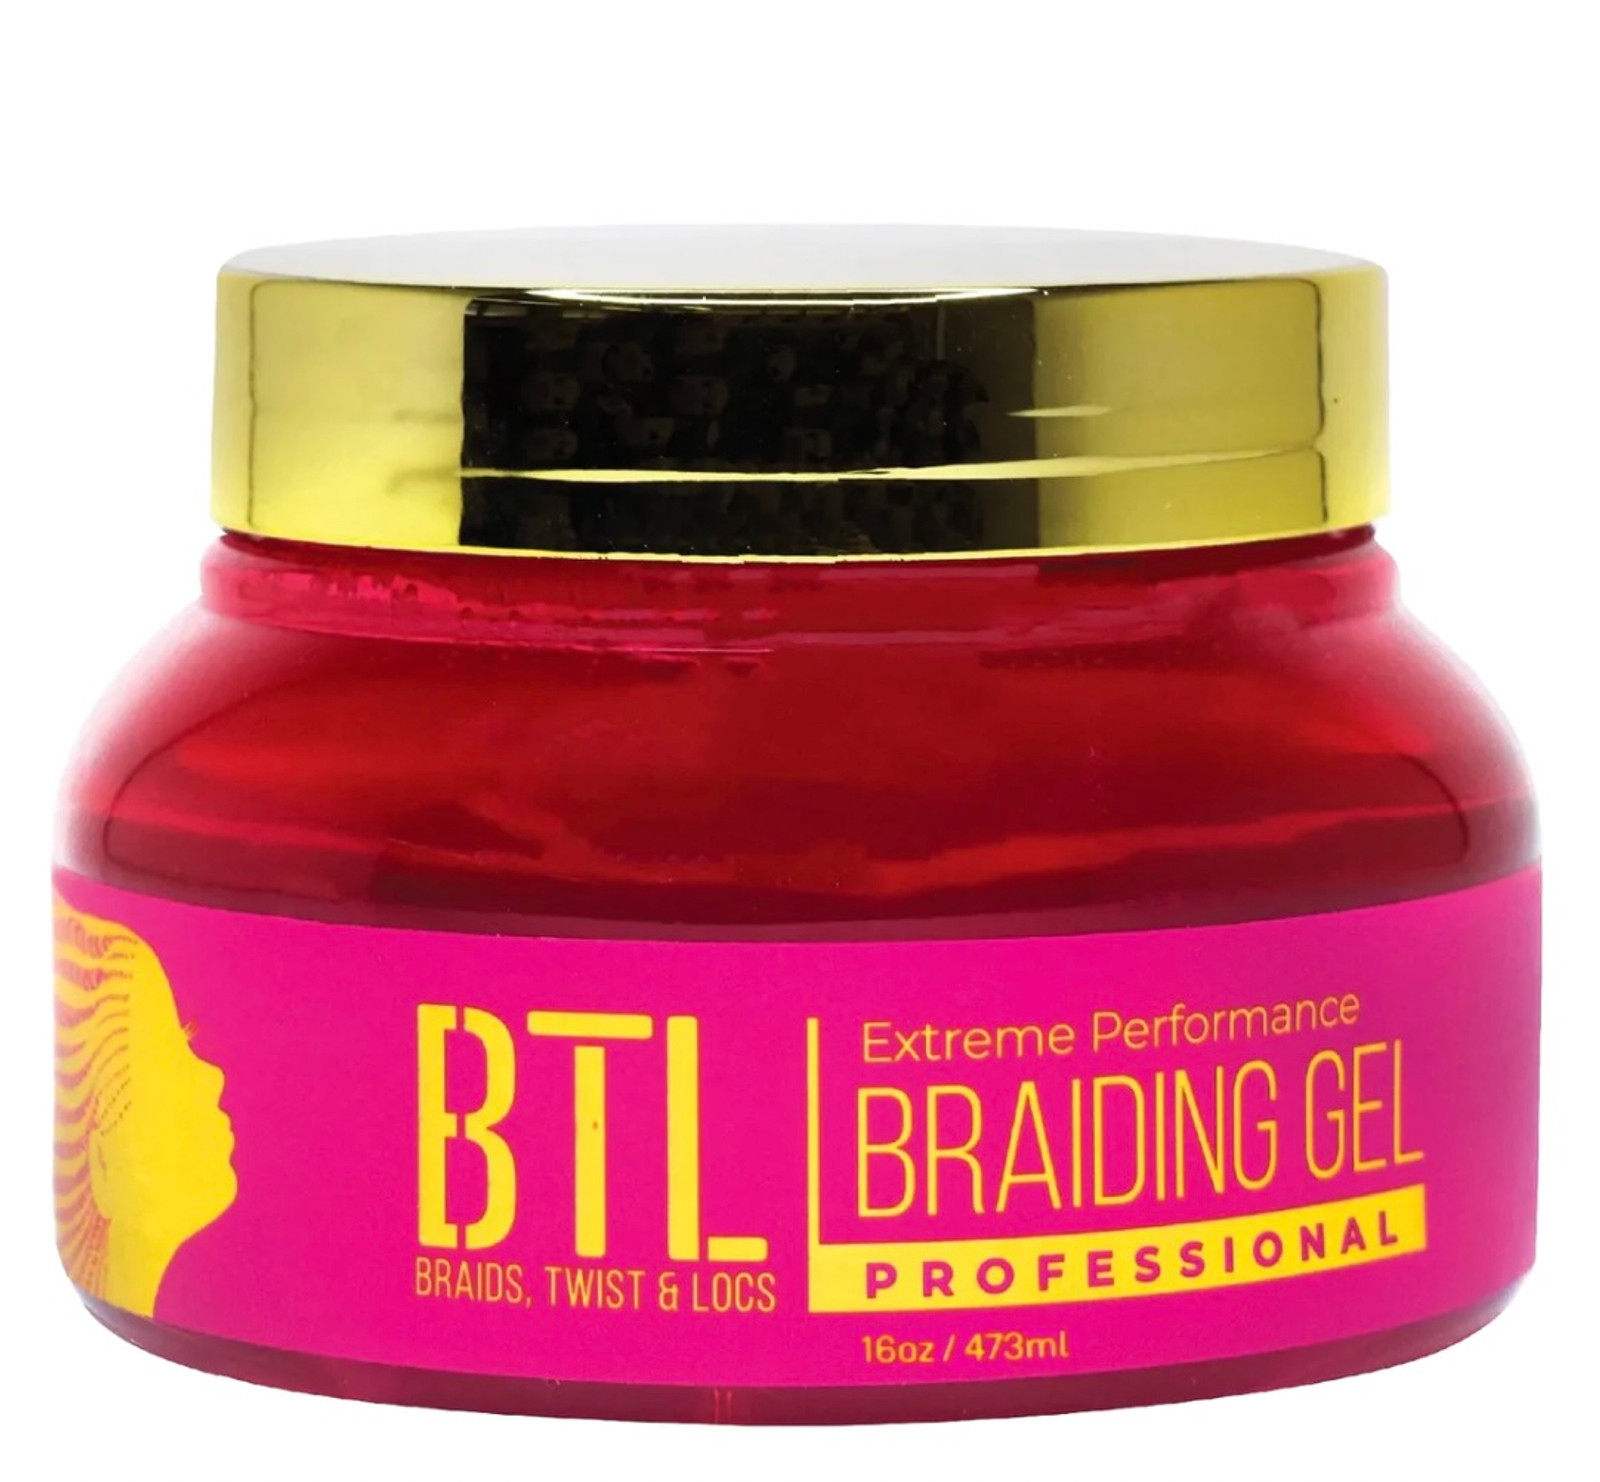 BTL Professional Ultimate Hold / Ultra Sooth & Shine Braider's Gel Level 5 BTLG04 - 8 oz / Premium